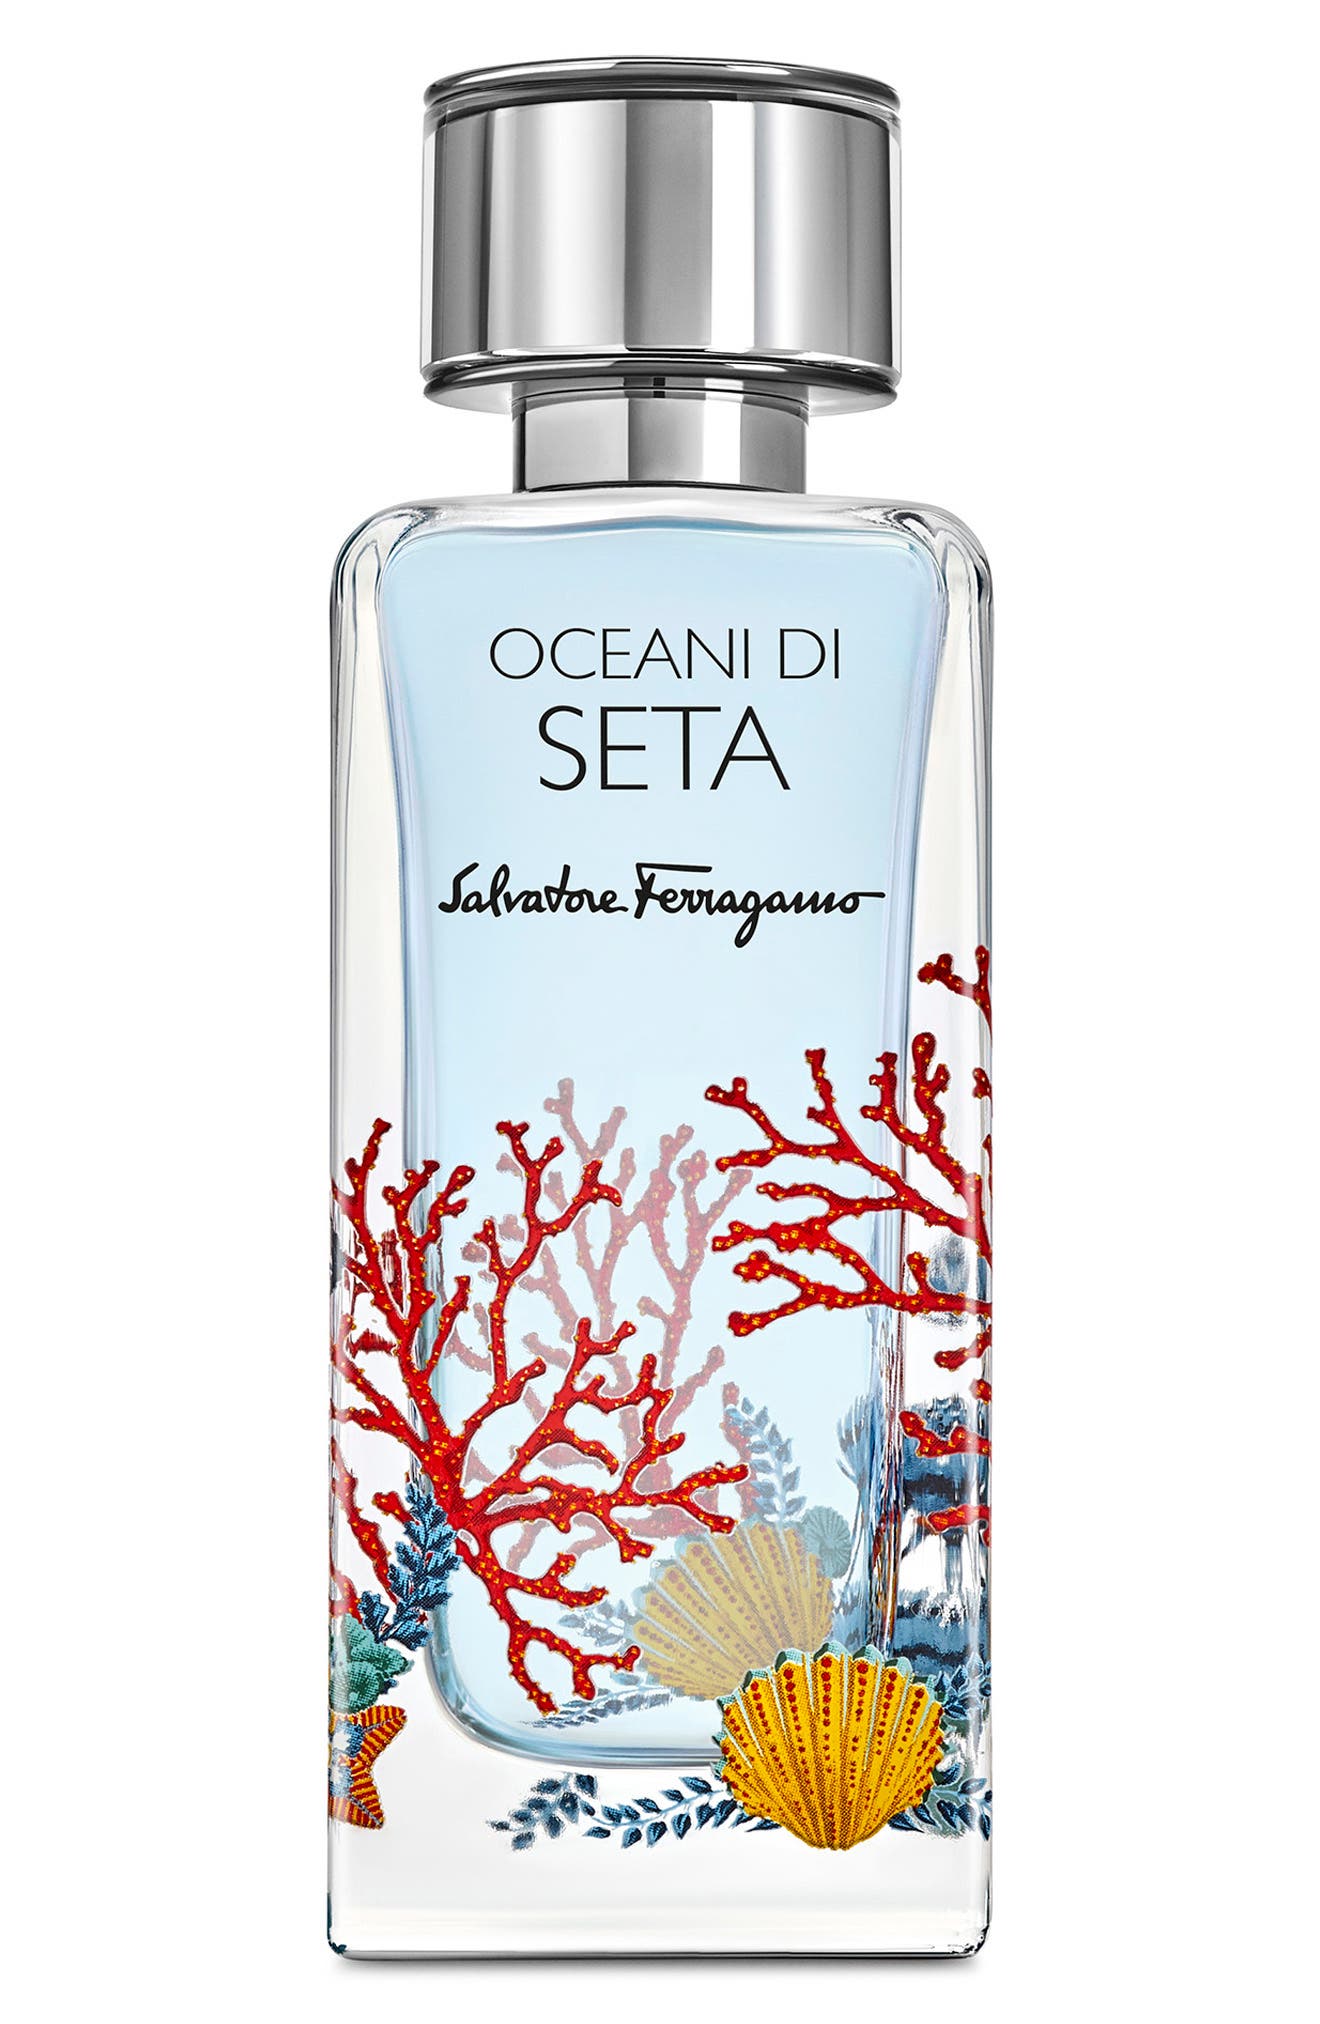 Salvatore Ferragamo Oceani di Seta Eau de Parfum at Nordstrom, Size 3.4 Oz